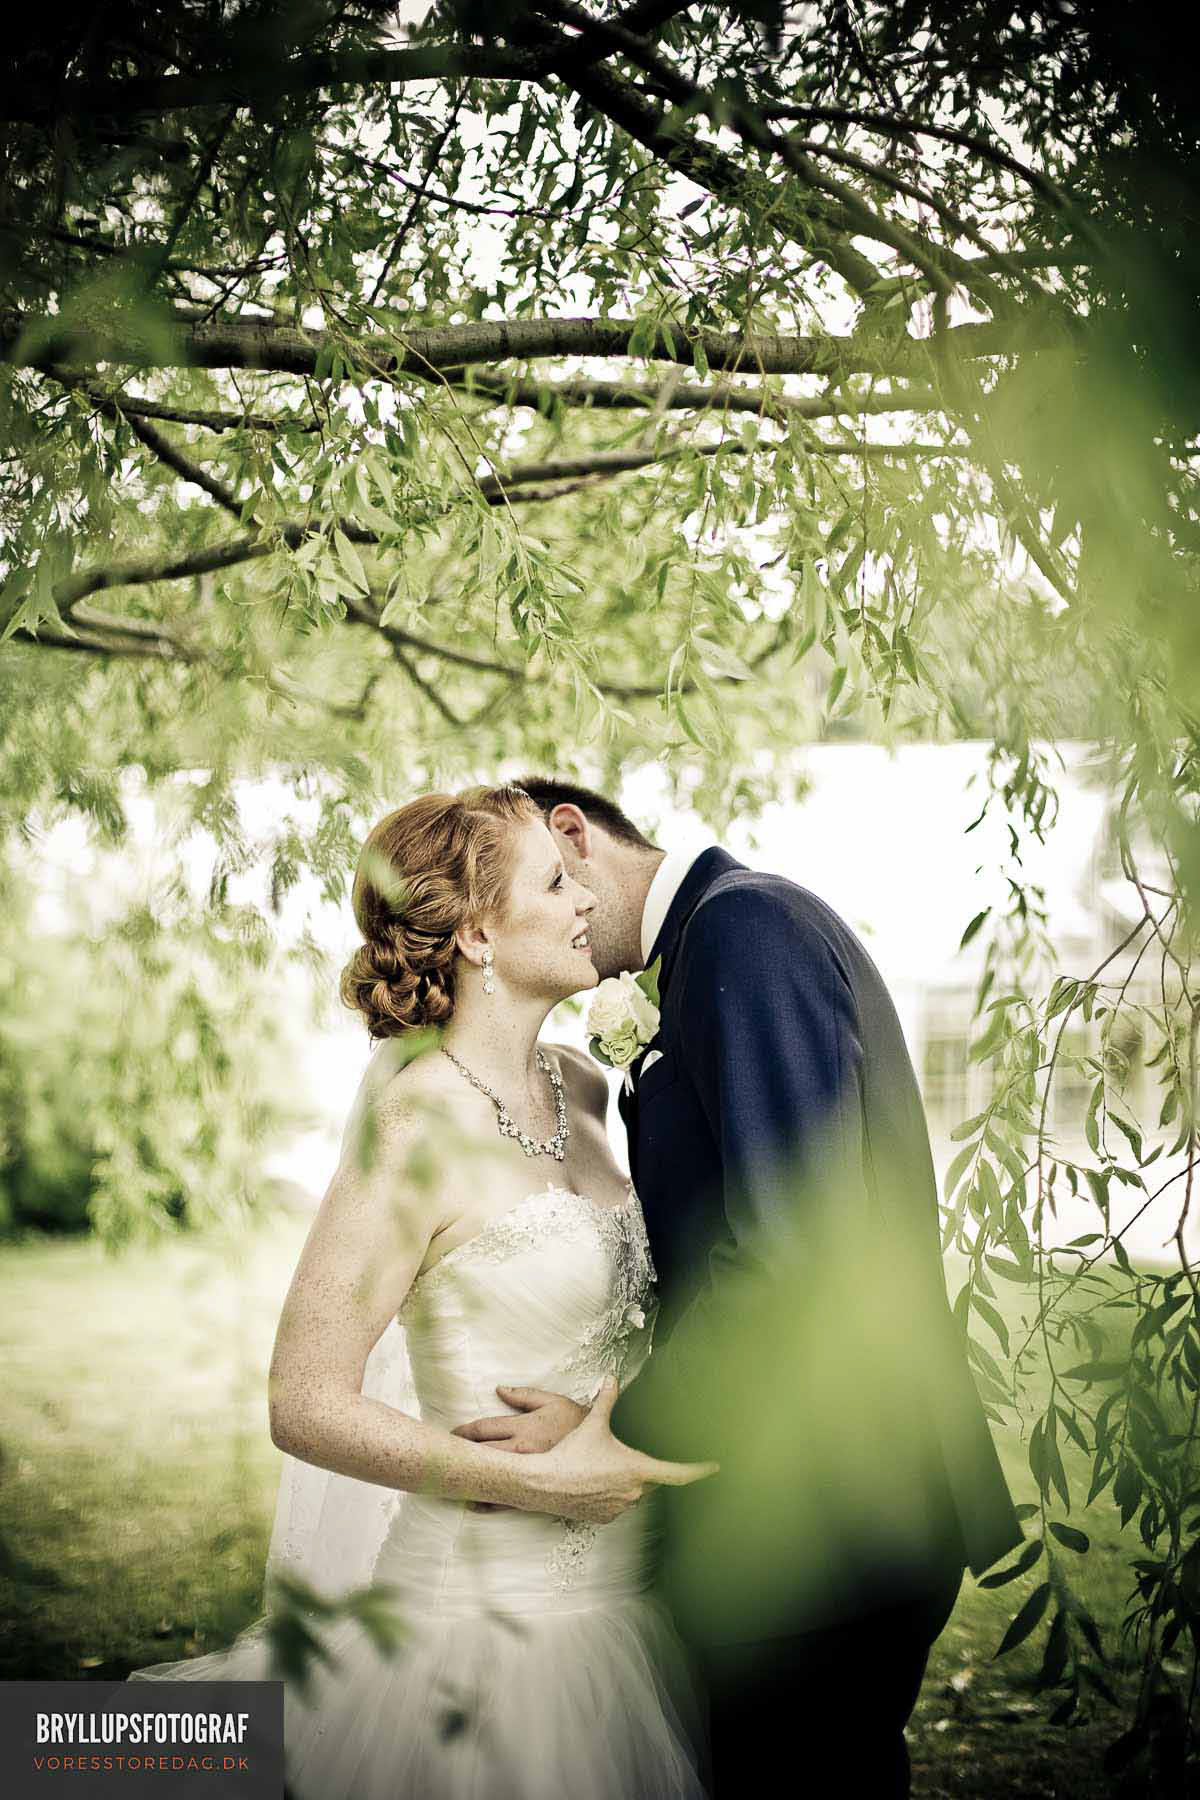 Image may contain: kiss, tree and bride